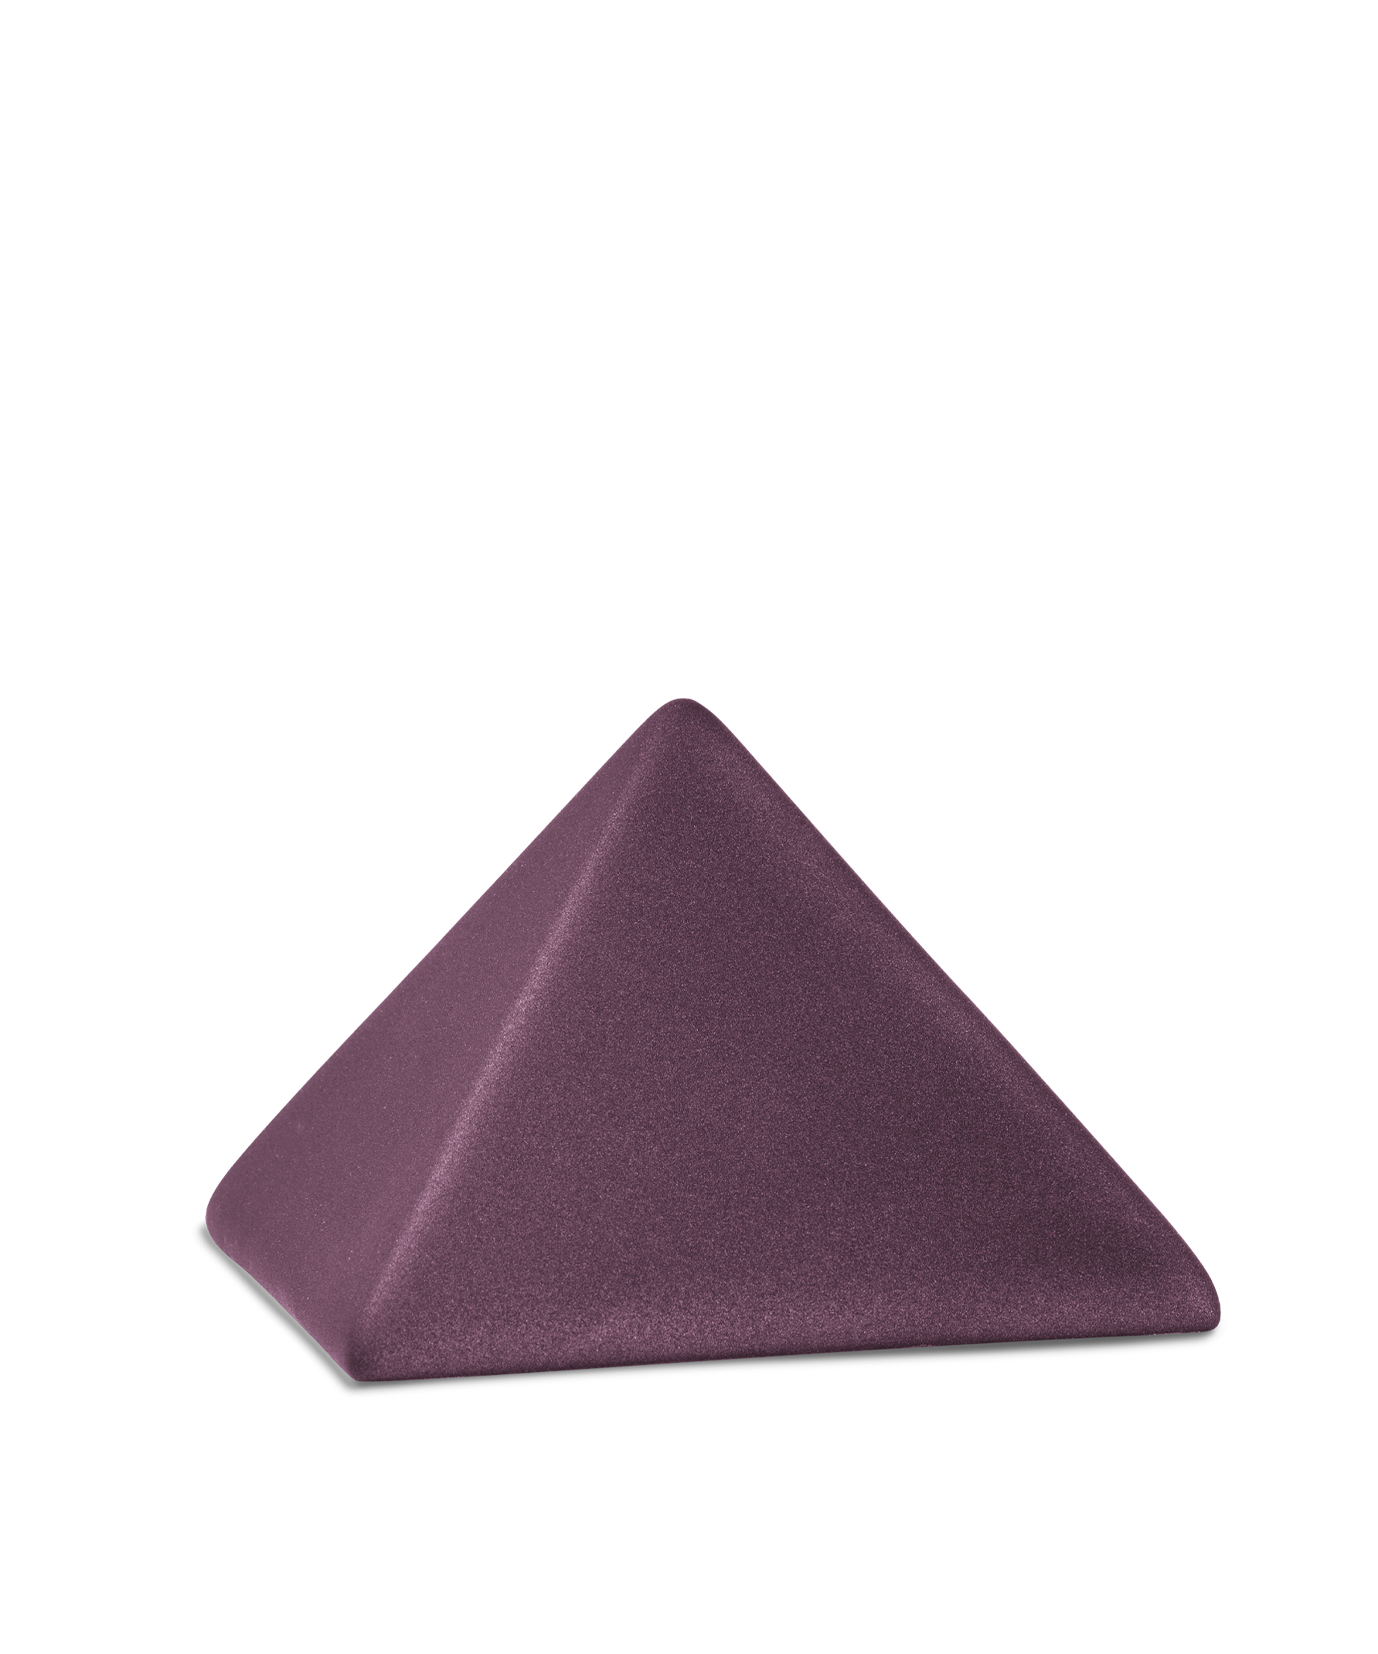 Tierurne - Keramik Pyramide berry 500ml